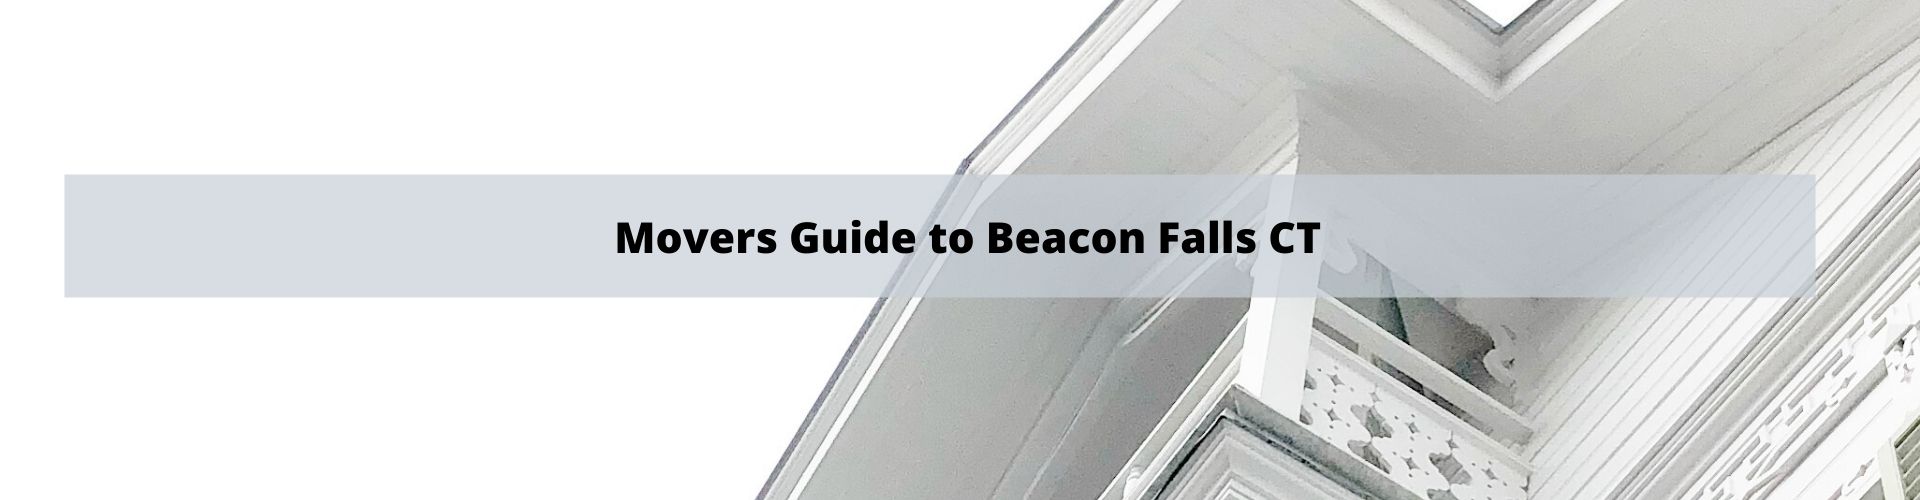 Beacon Falls CT Mover's Guide